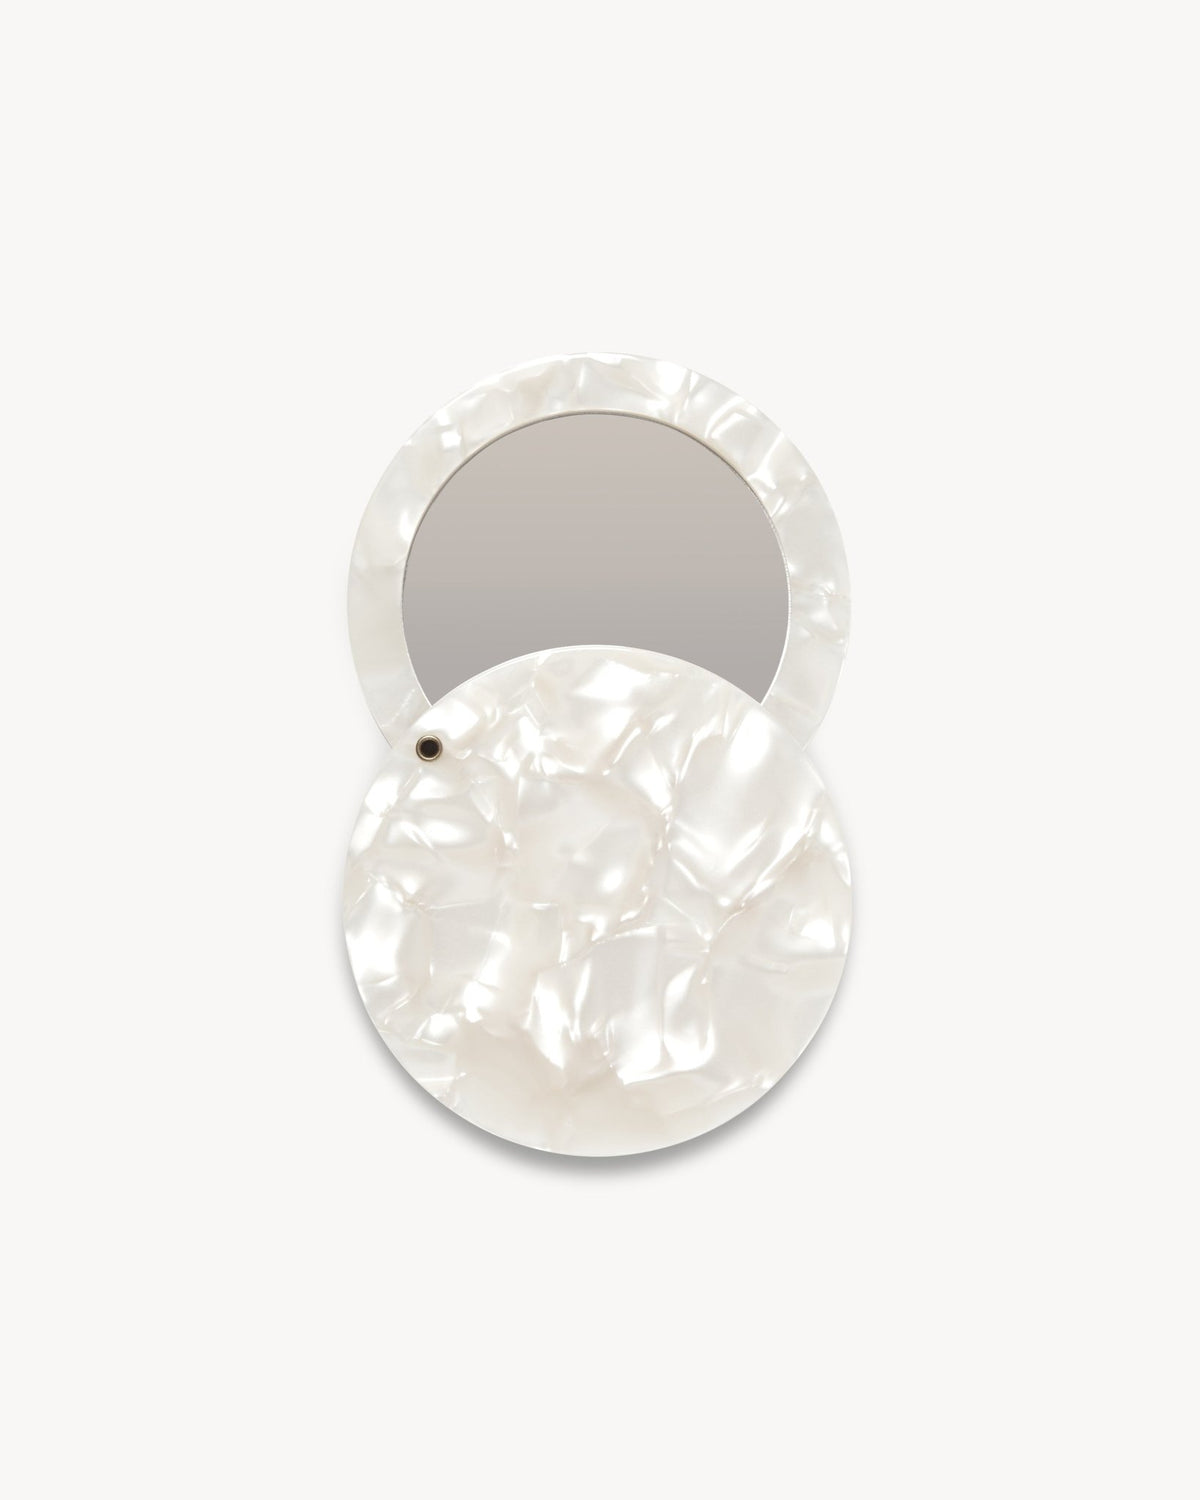 Circle Mirror in White Shell - MACHETE